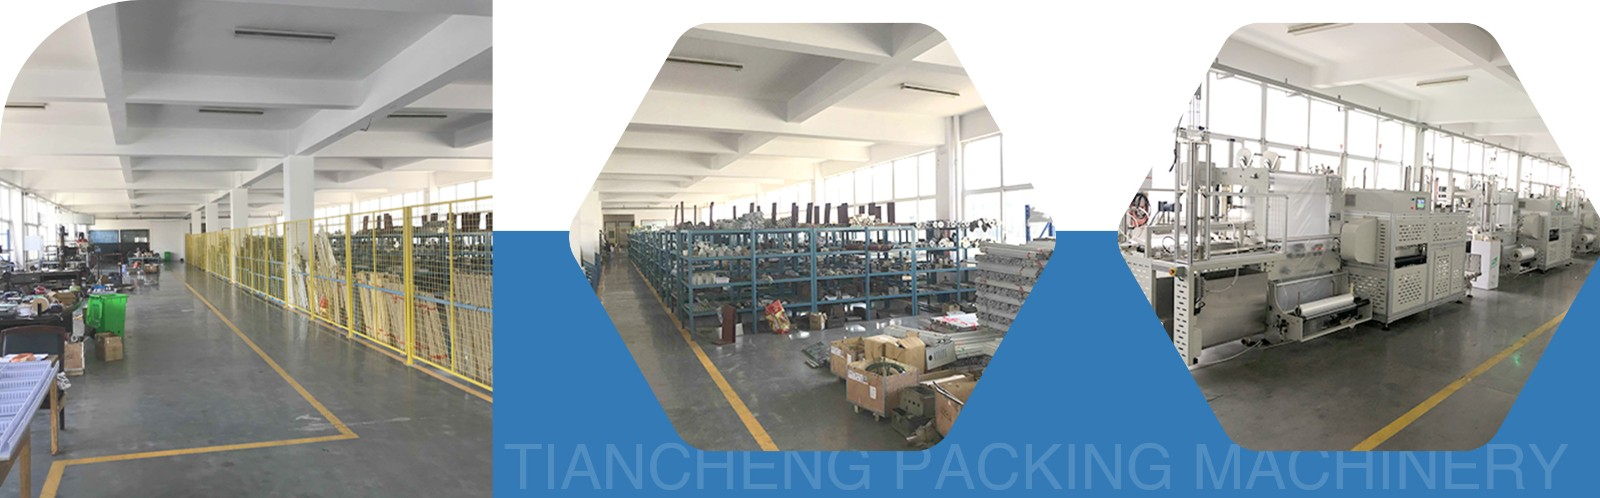 Tiancheng Factory workshop